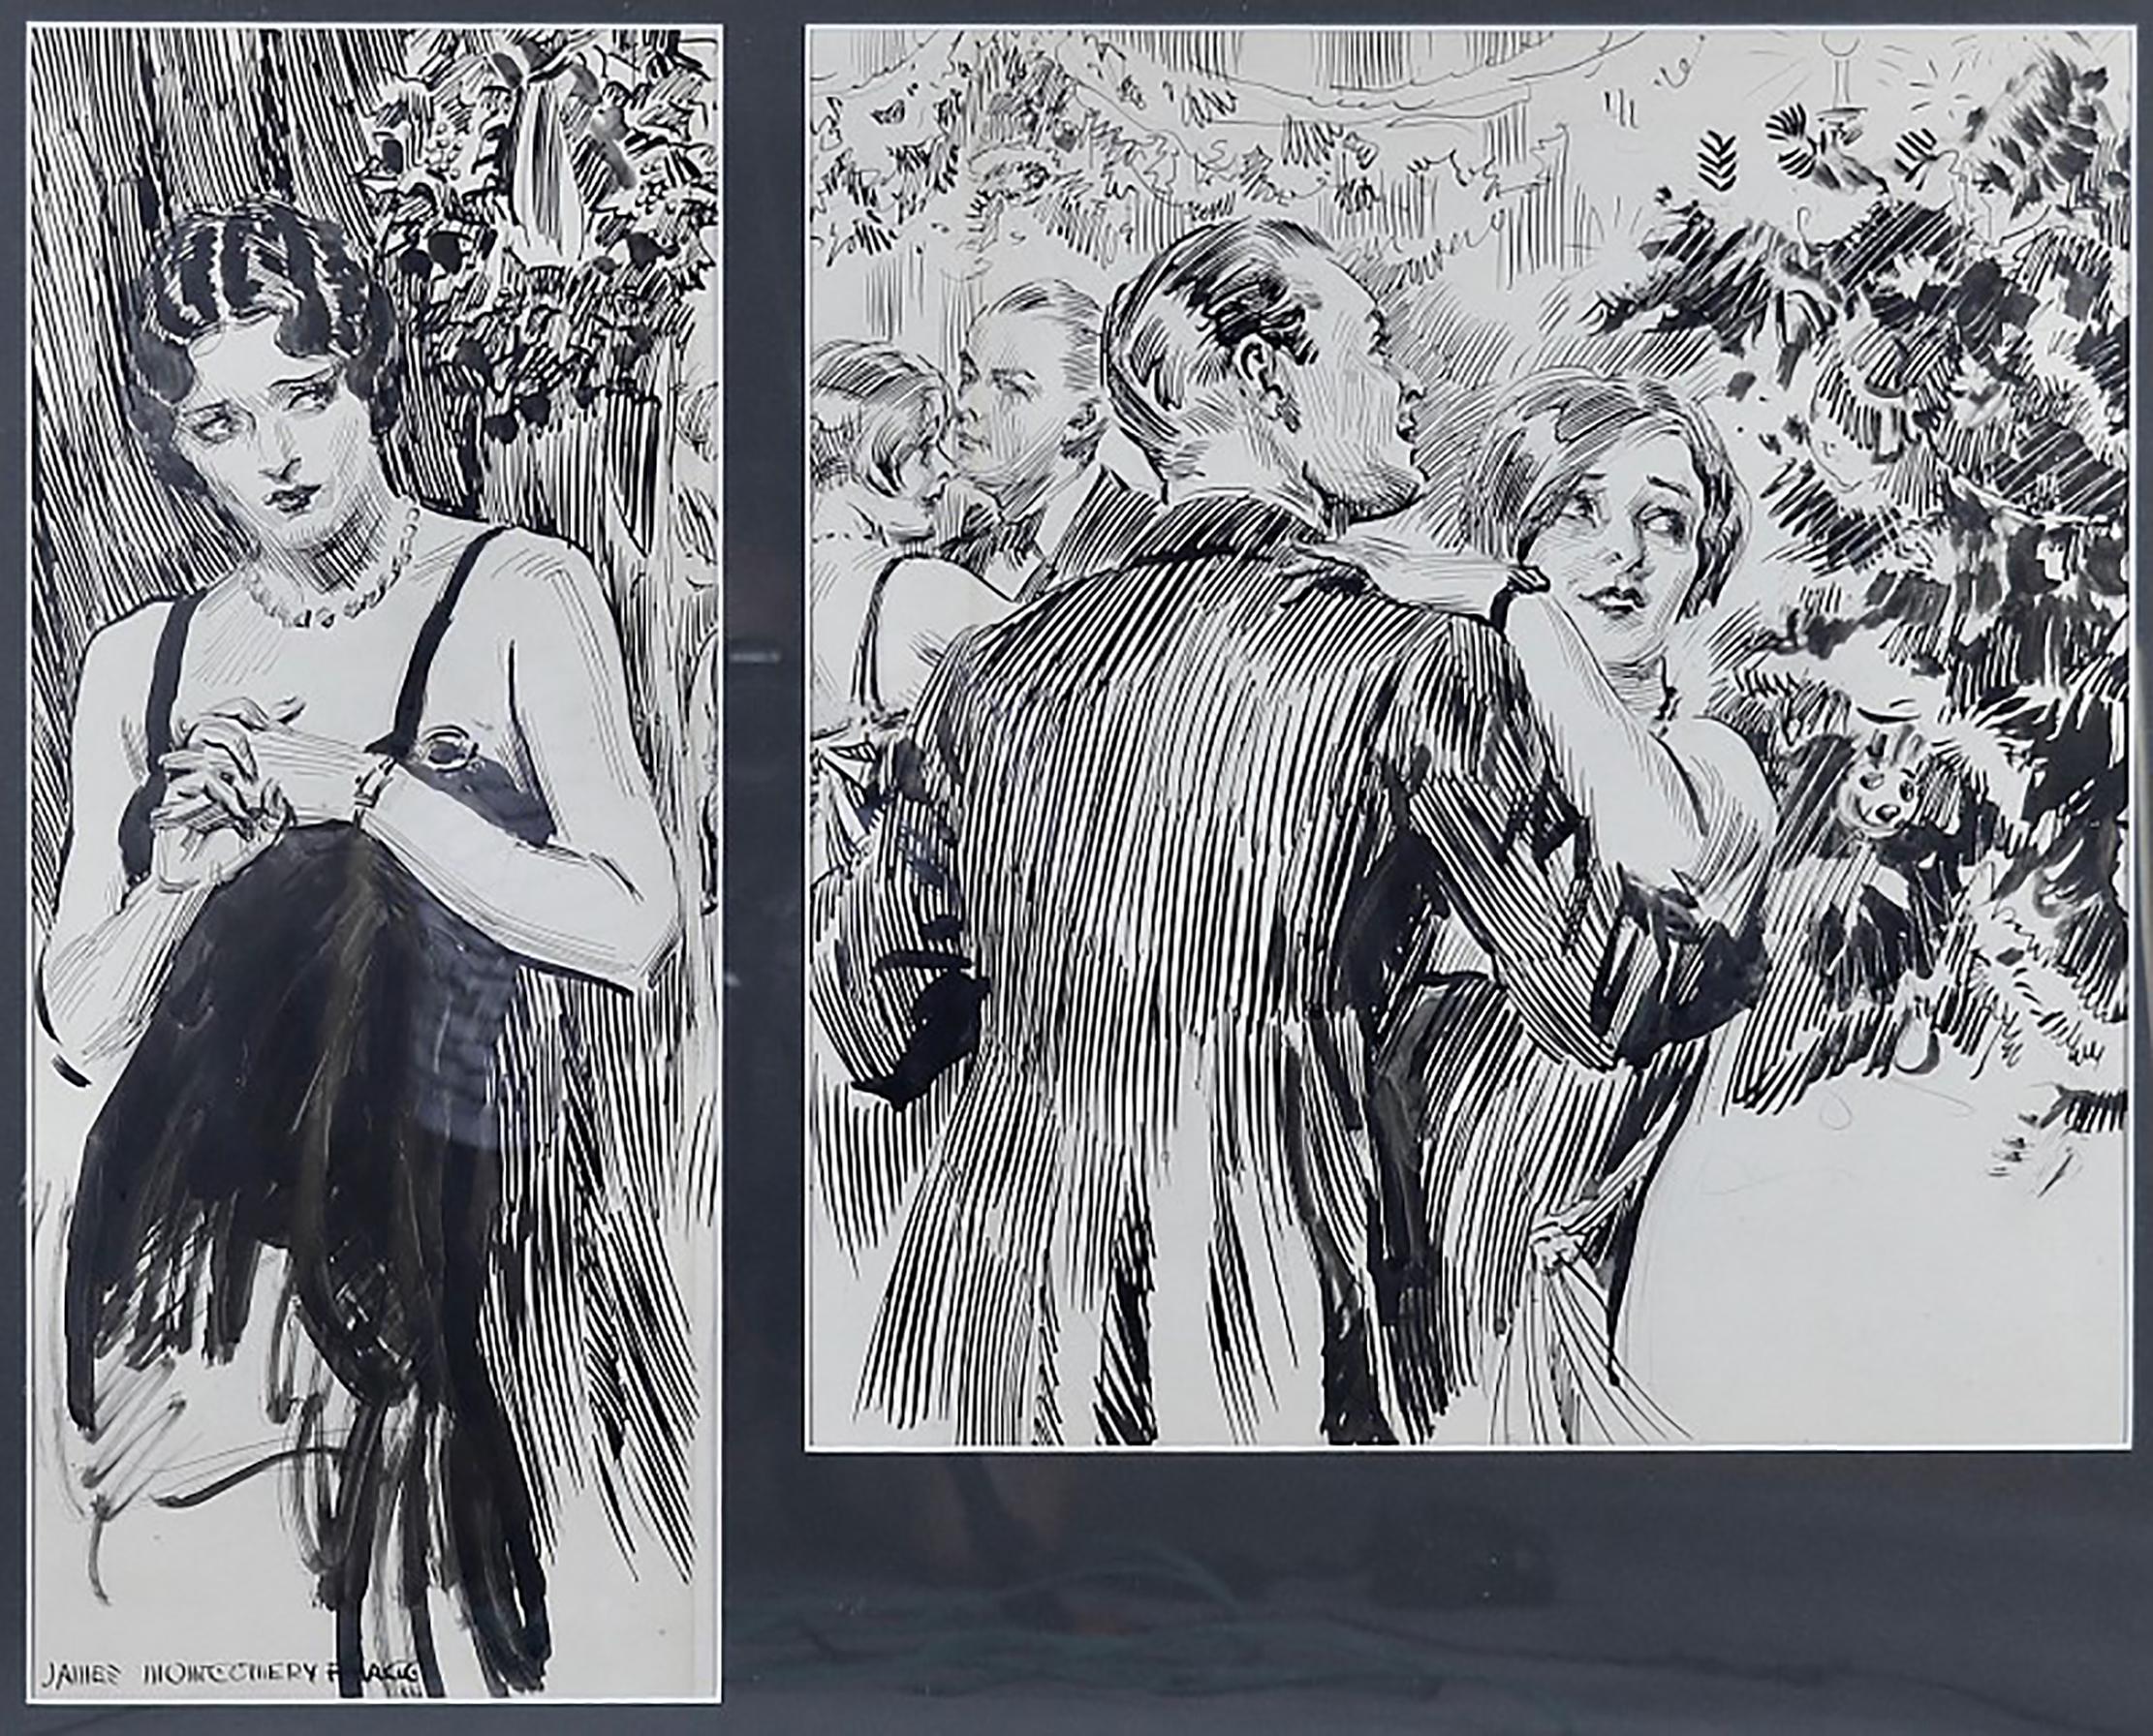 James Montgomery Flagg Figurative Art - Dancing with Woman Overlooking